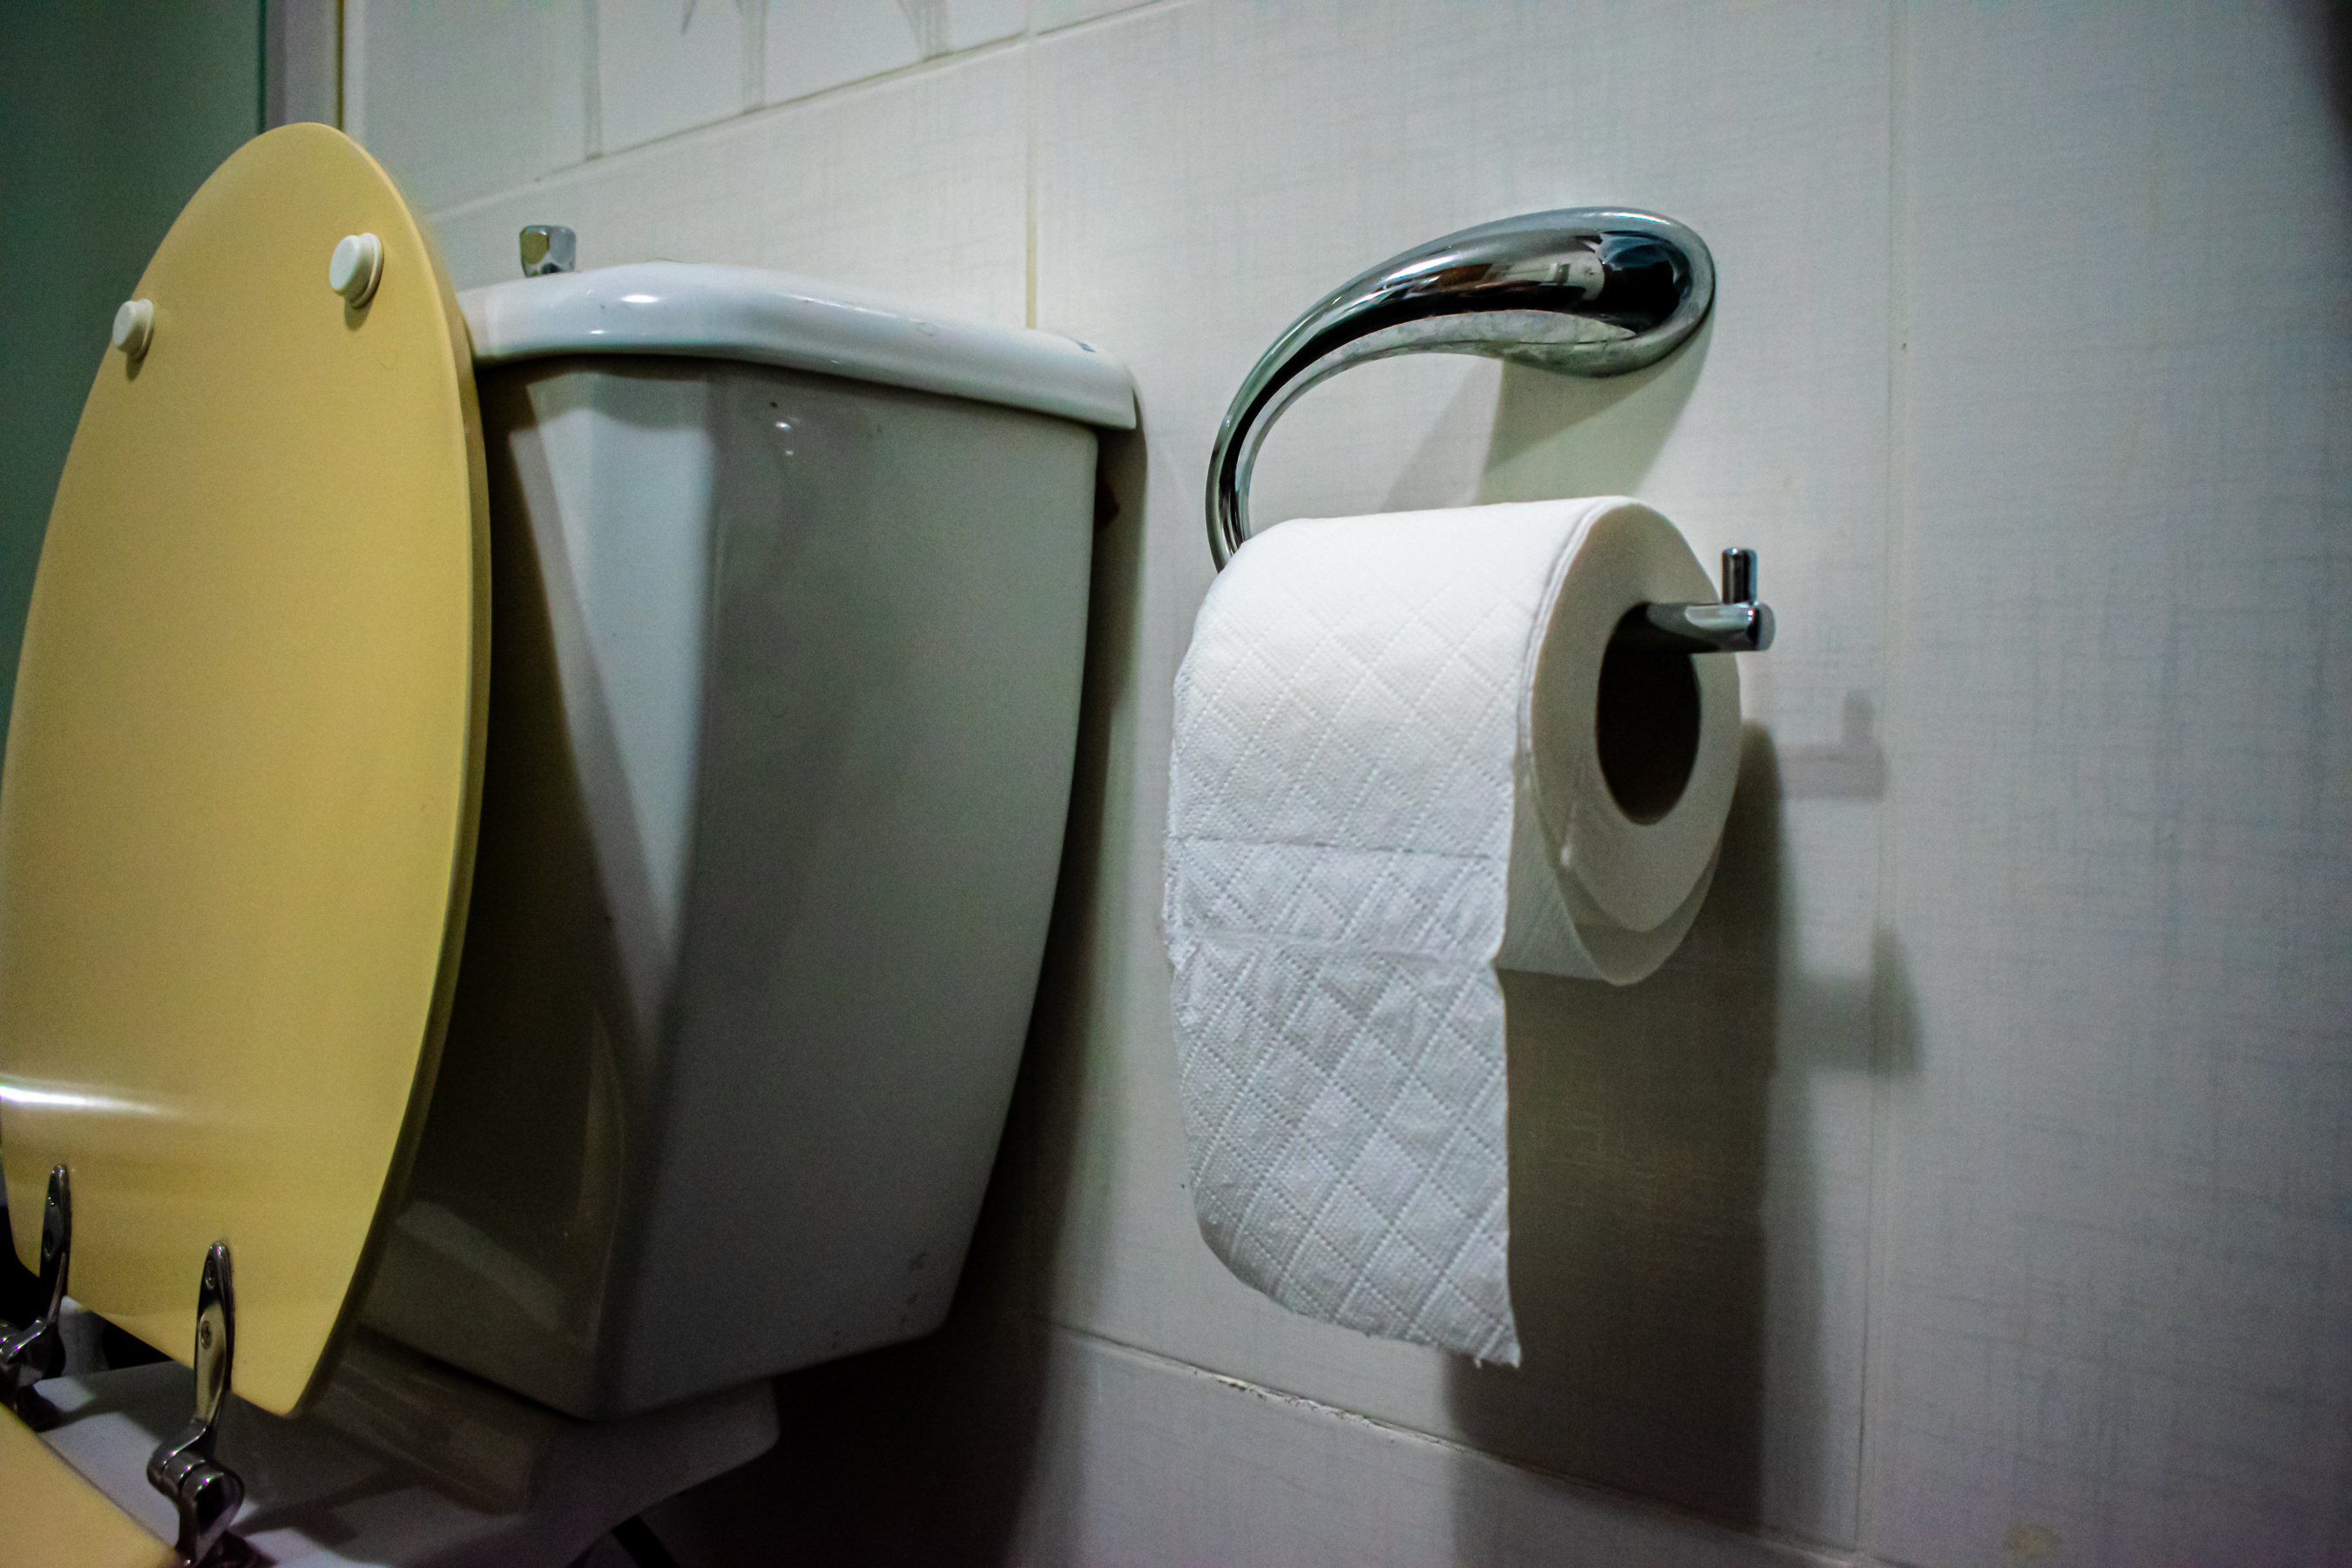 Bathroom With Unfortunate Toilet Seat Pattern Branded ‘Worst Design Decision’